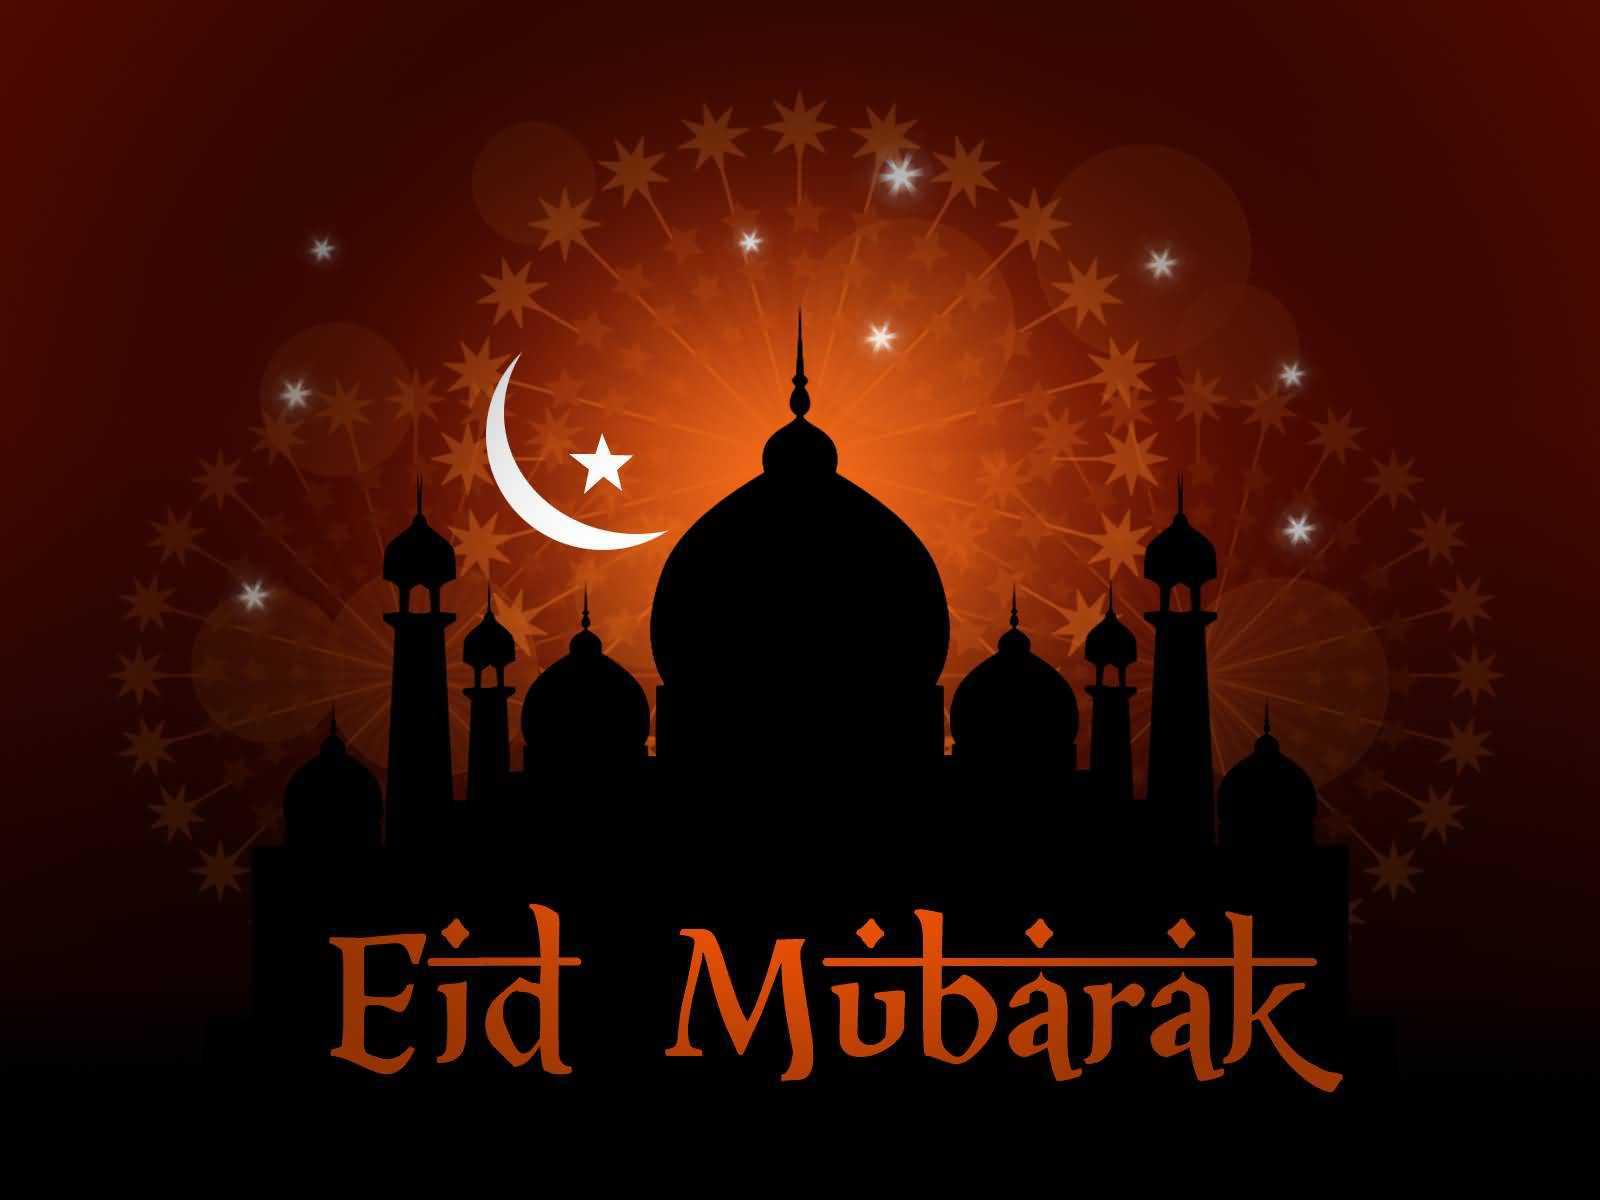 Eid Ul Fitar Mubarak 2019 Image, Photo Greetings & Quotes In Urdu